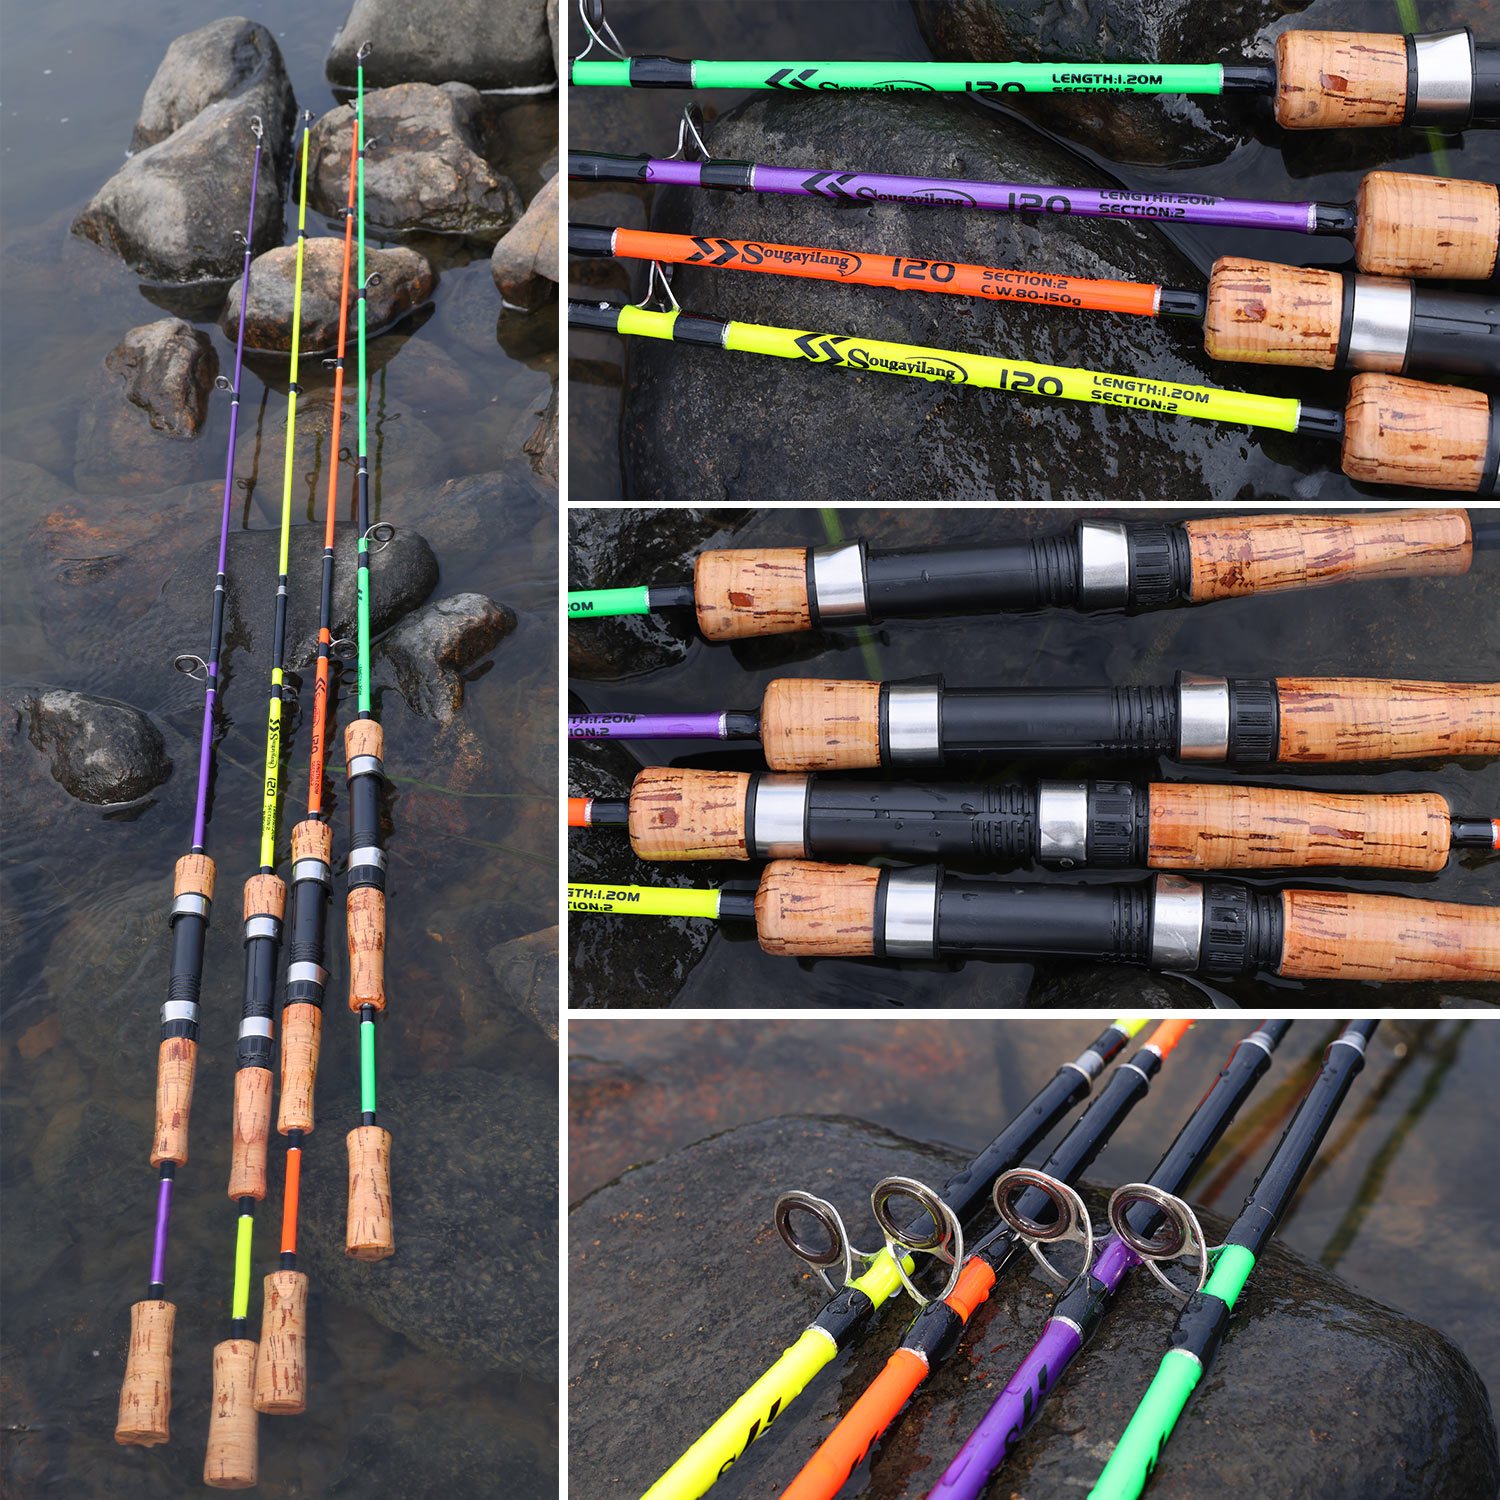 Sougayilang Boat Fishing Rod Set 2 Section Carbon Fishing Rod and